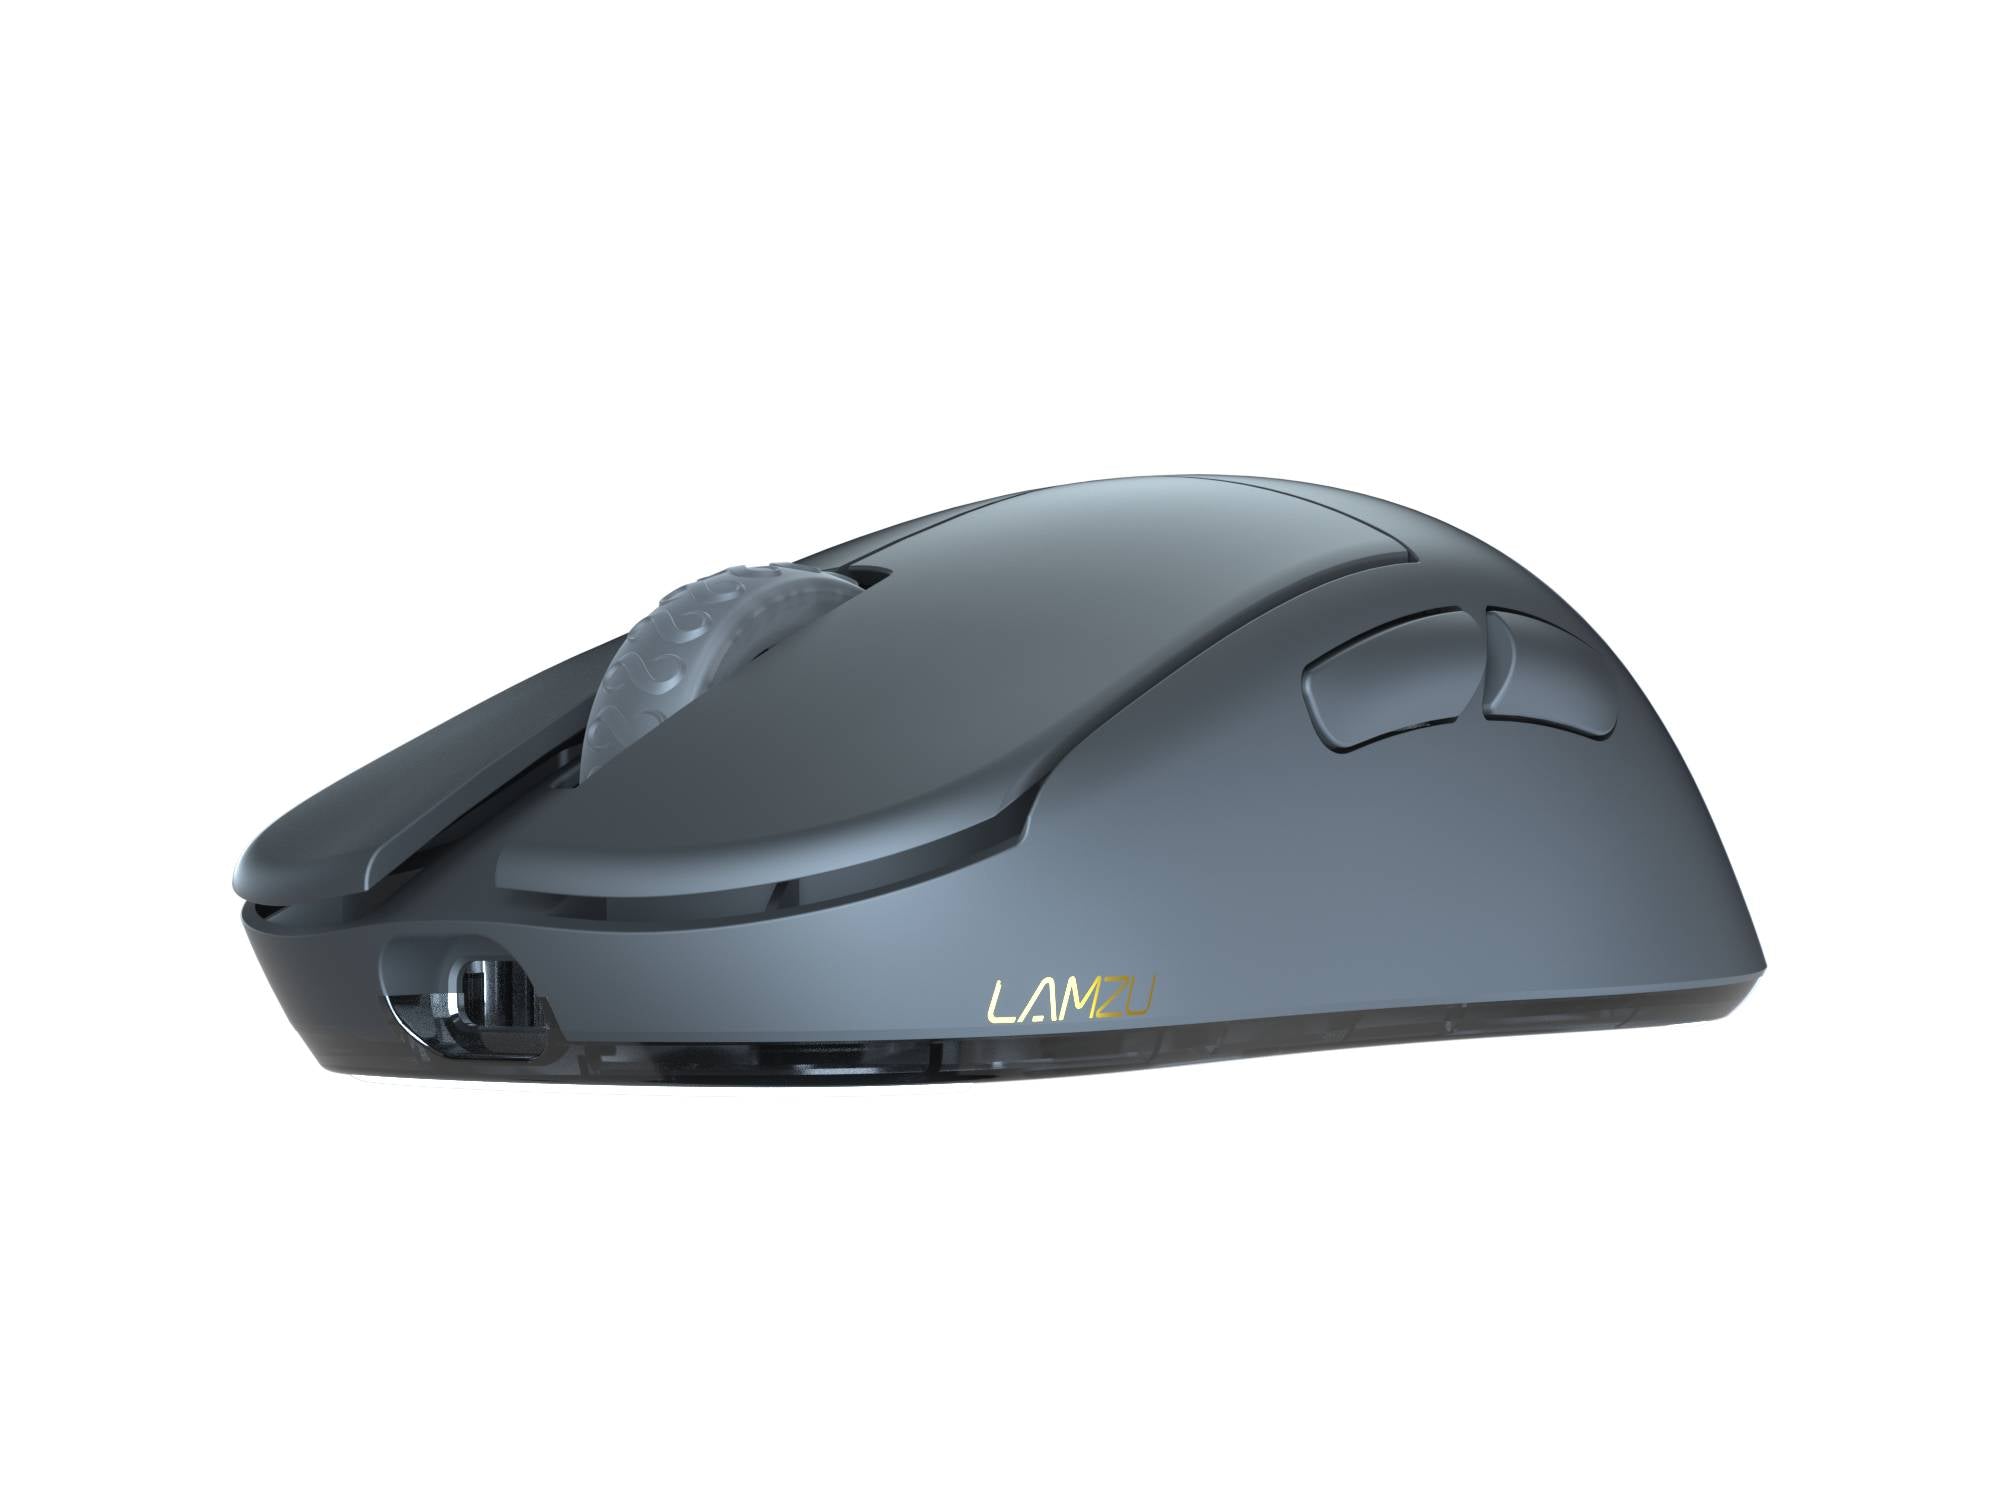 Lamzu Atlantis Mini Wireless Gaming Mouse - Charcoal Black 